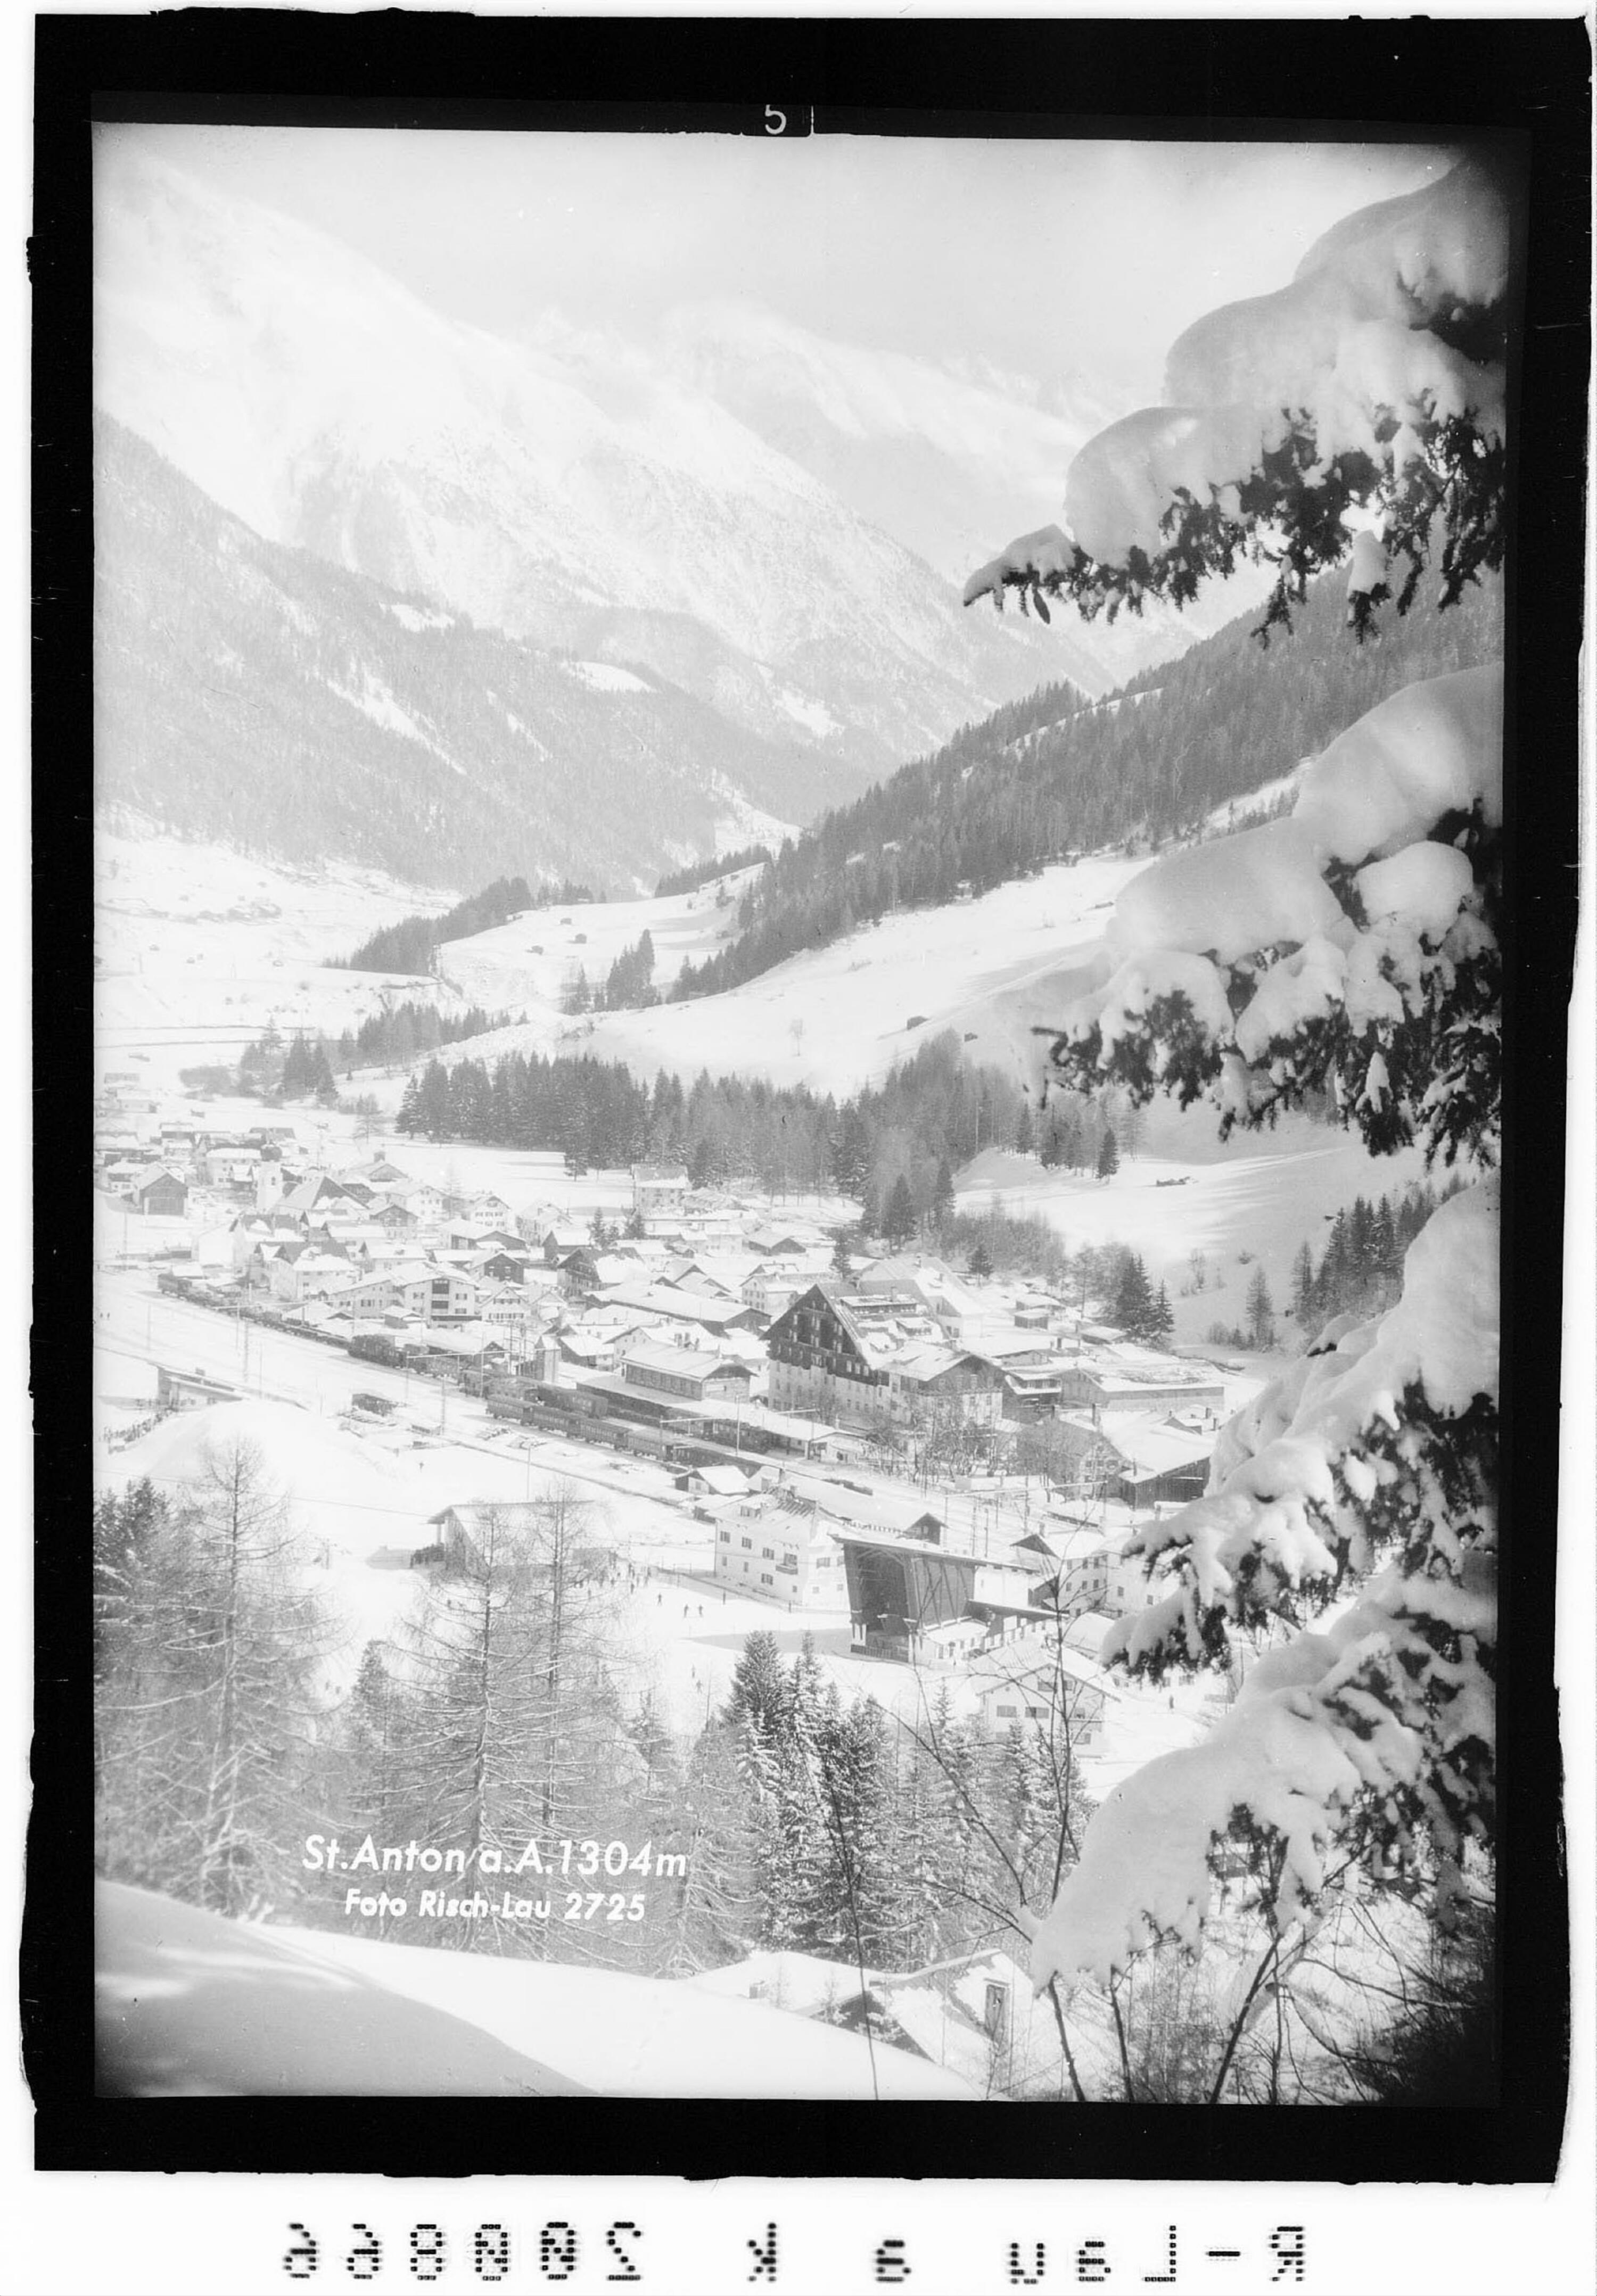 St.Anton am Arlberg 1304 m></div>


    <hr>
    <div class=